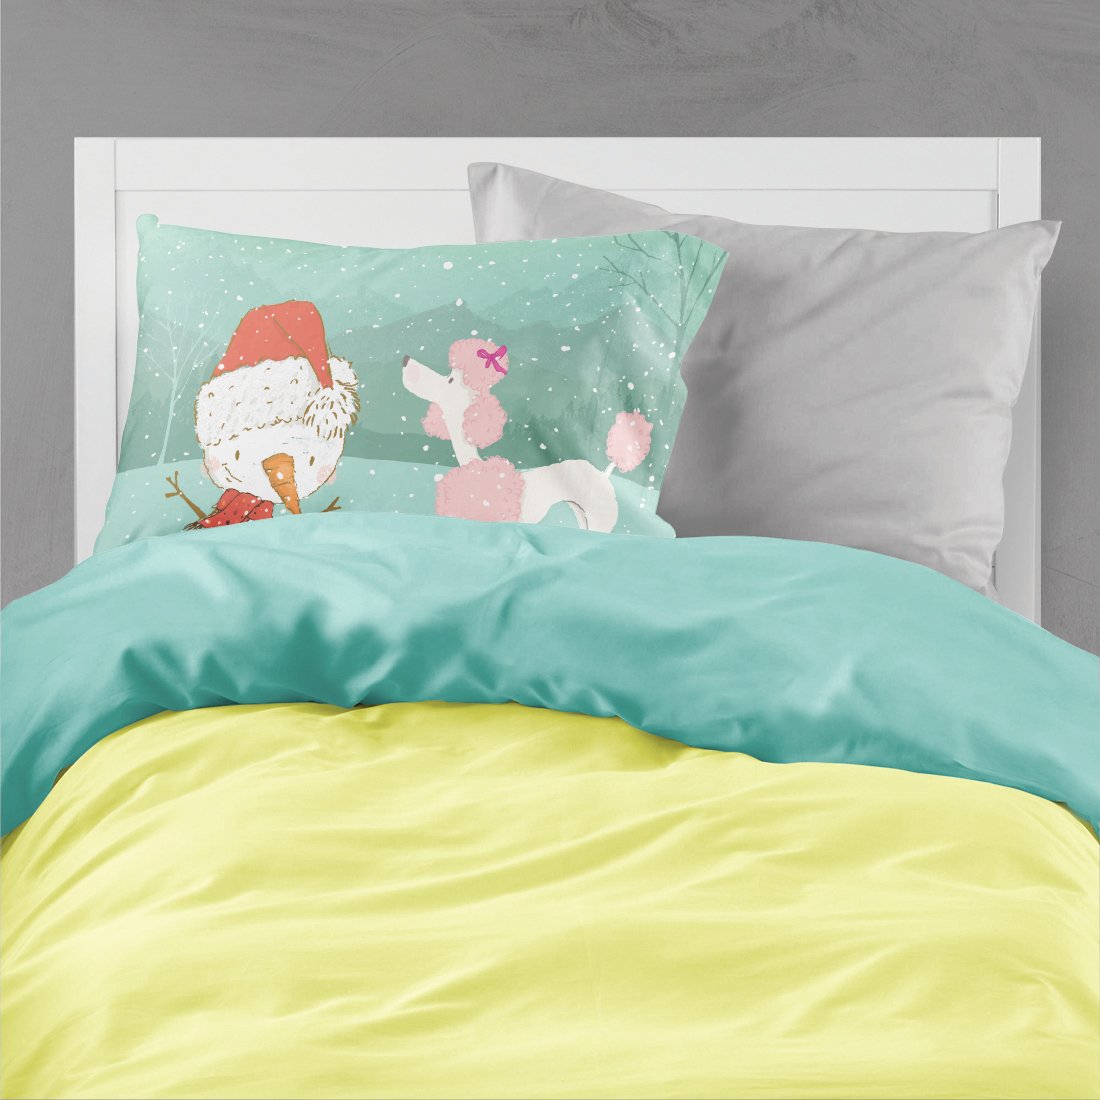 Pink Poodle Snowman Christmas Fabric Standard Pillowcase CK2066PILLOWCASE by Caroline's Treasures